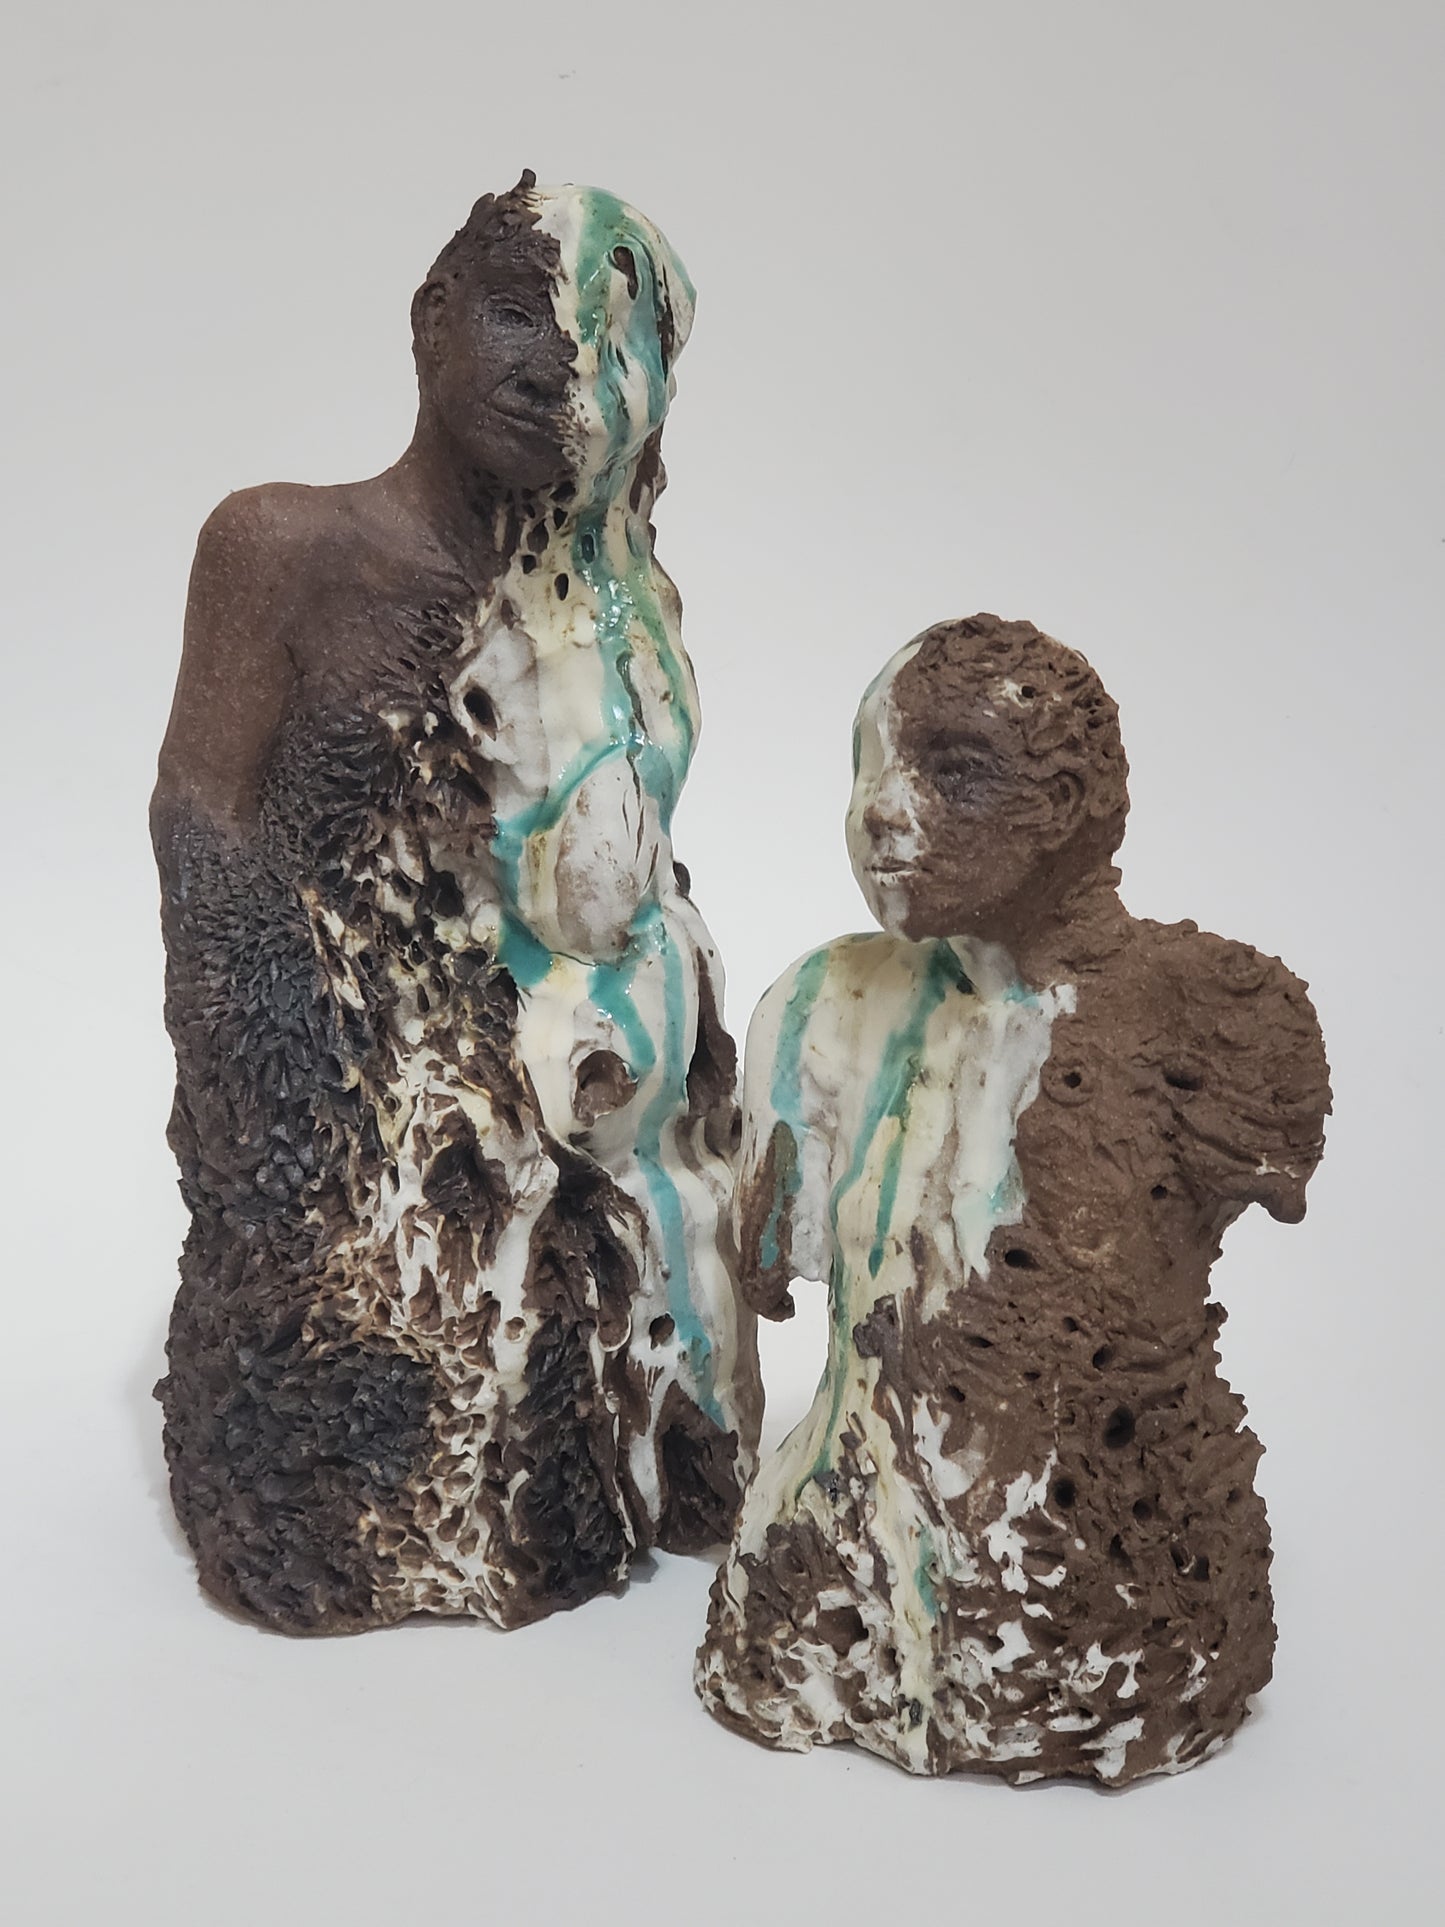 Sculpture, set of 2 figures, dark and light